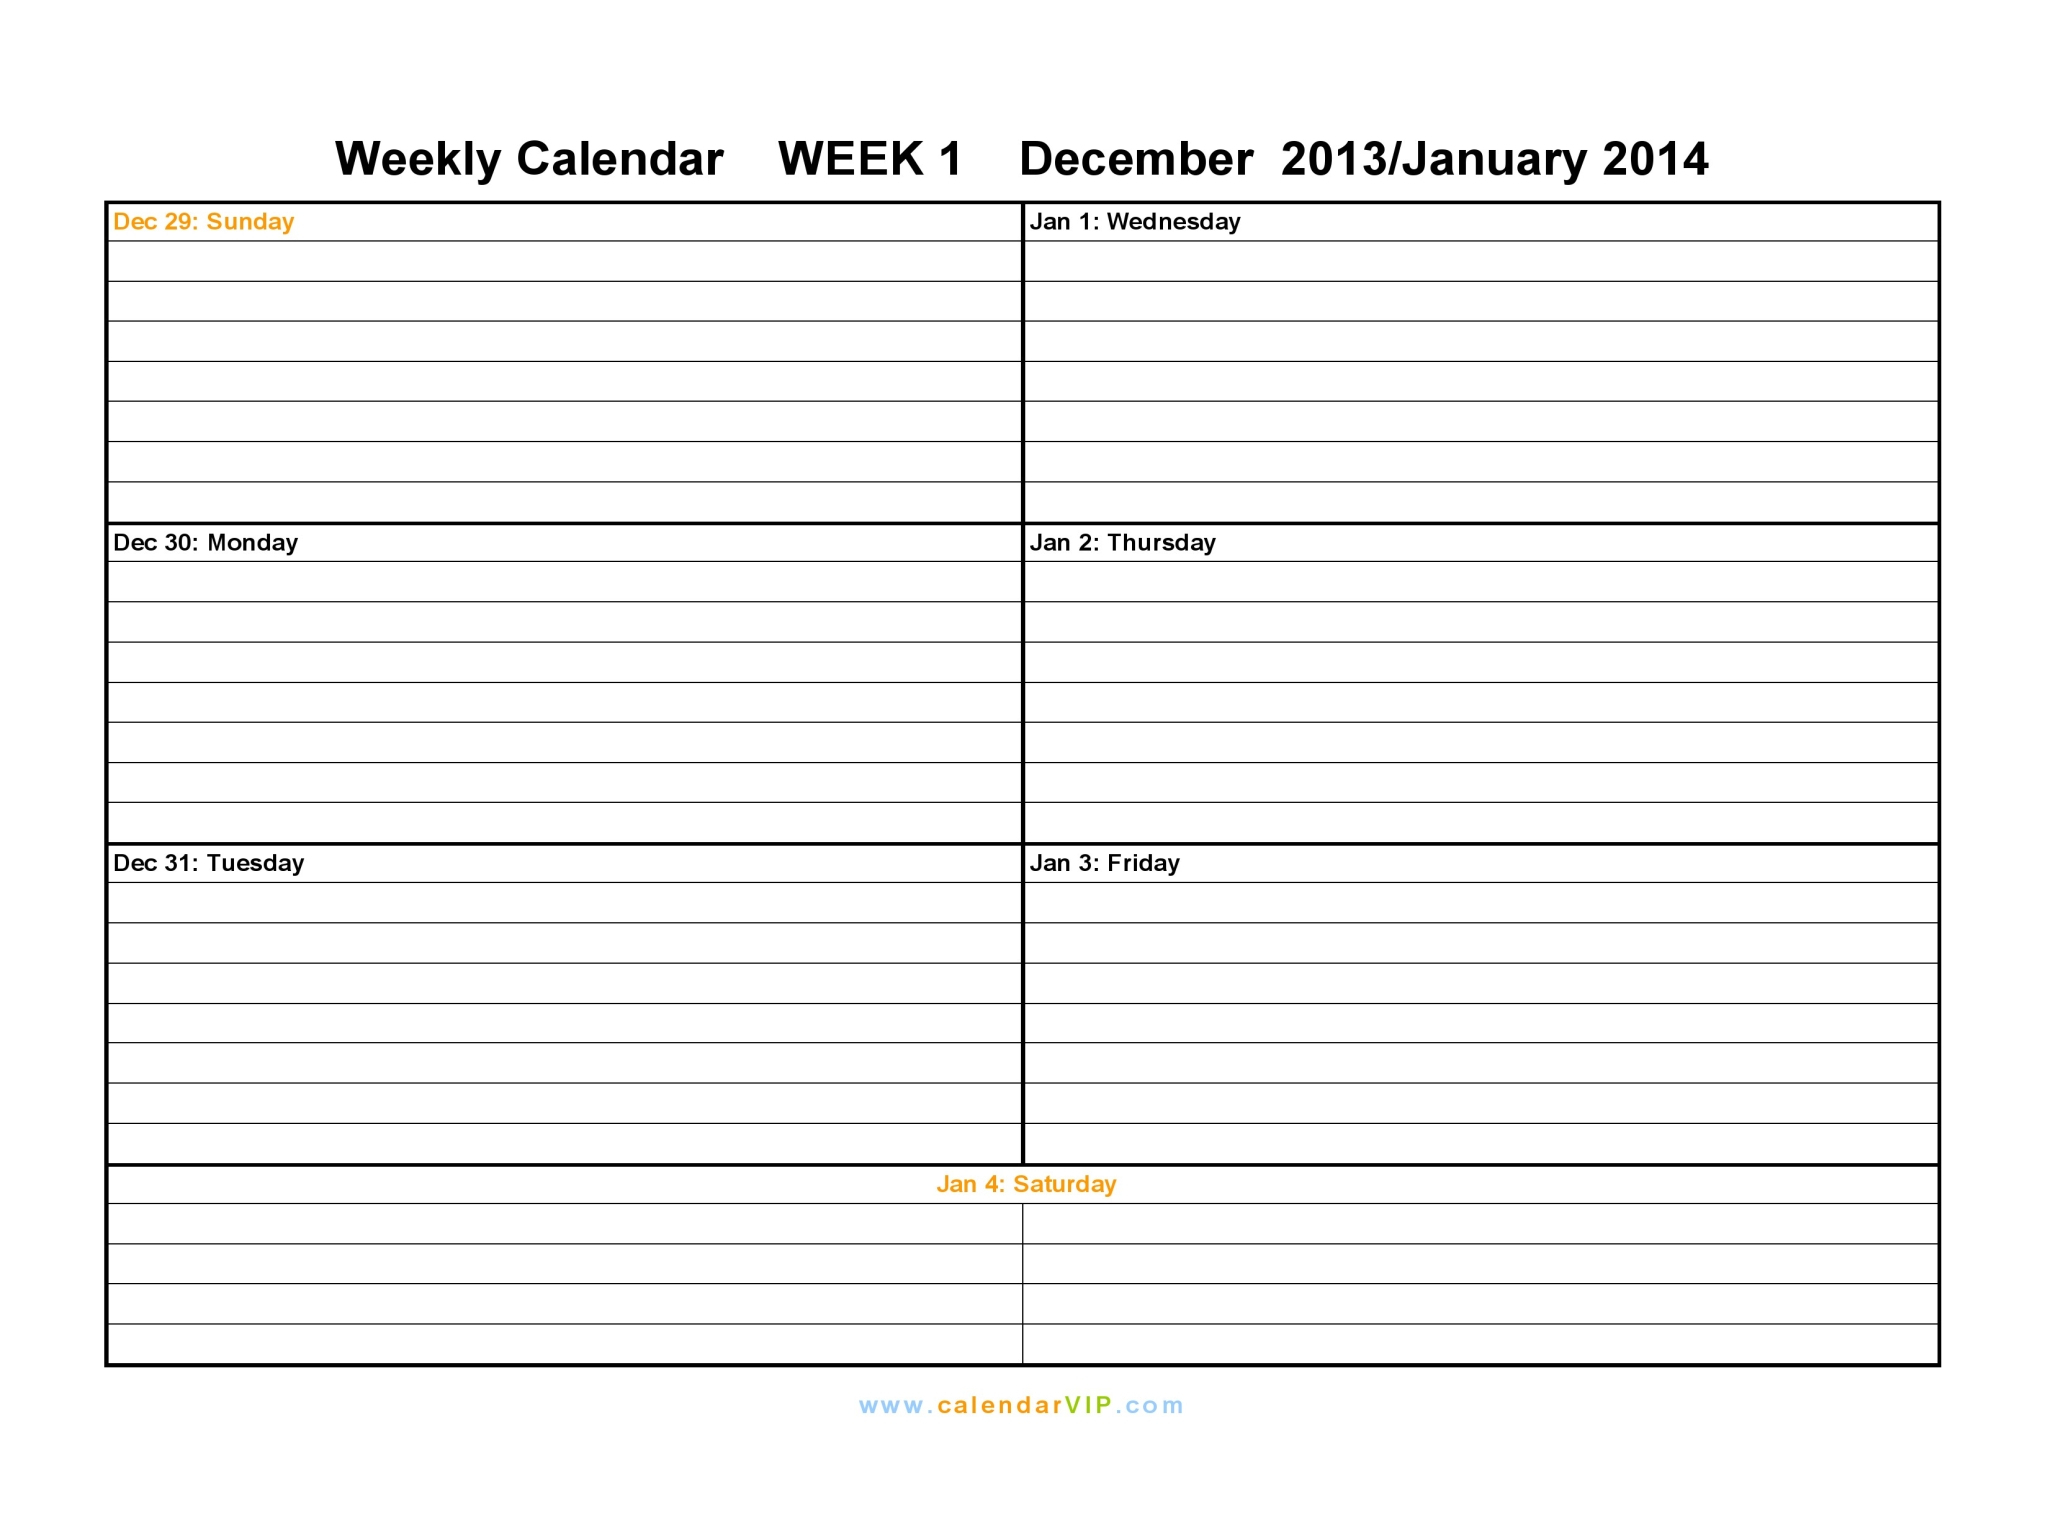 Weekly Calendar 2015 Free Weekly Calendar Templates 3